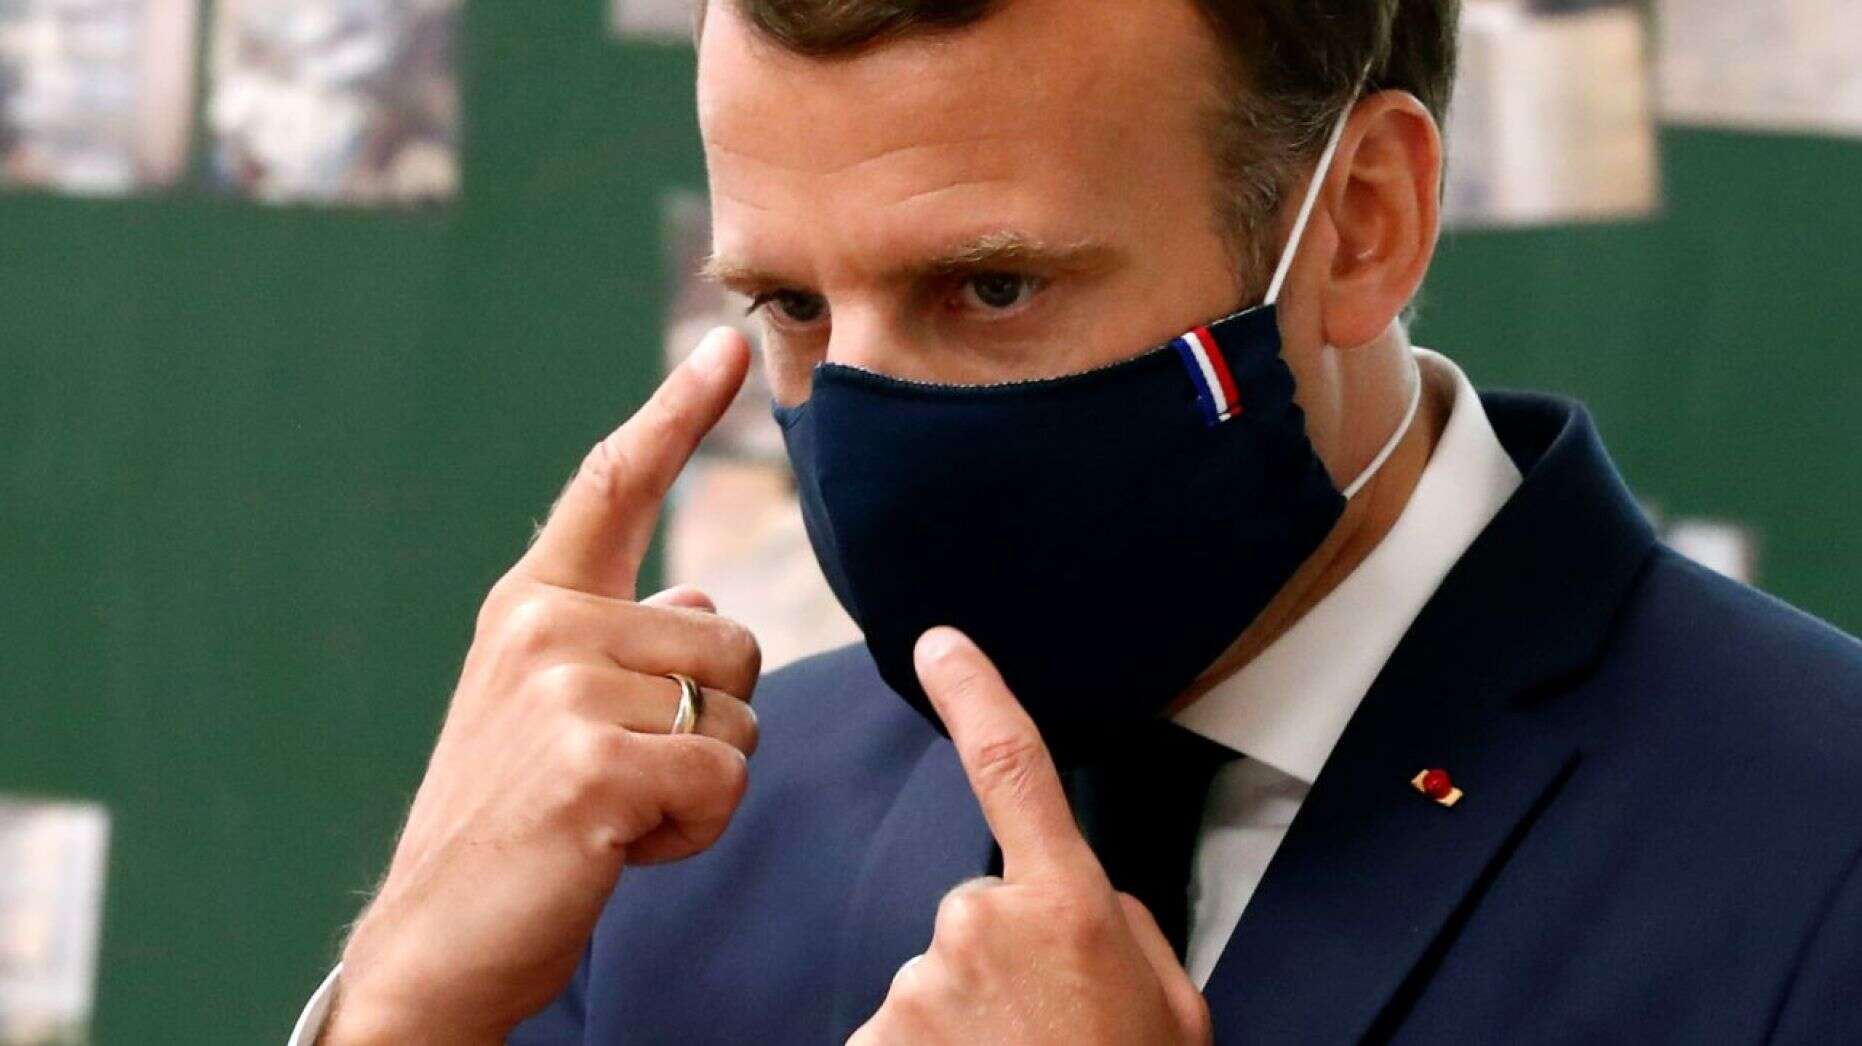 French President